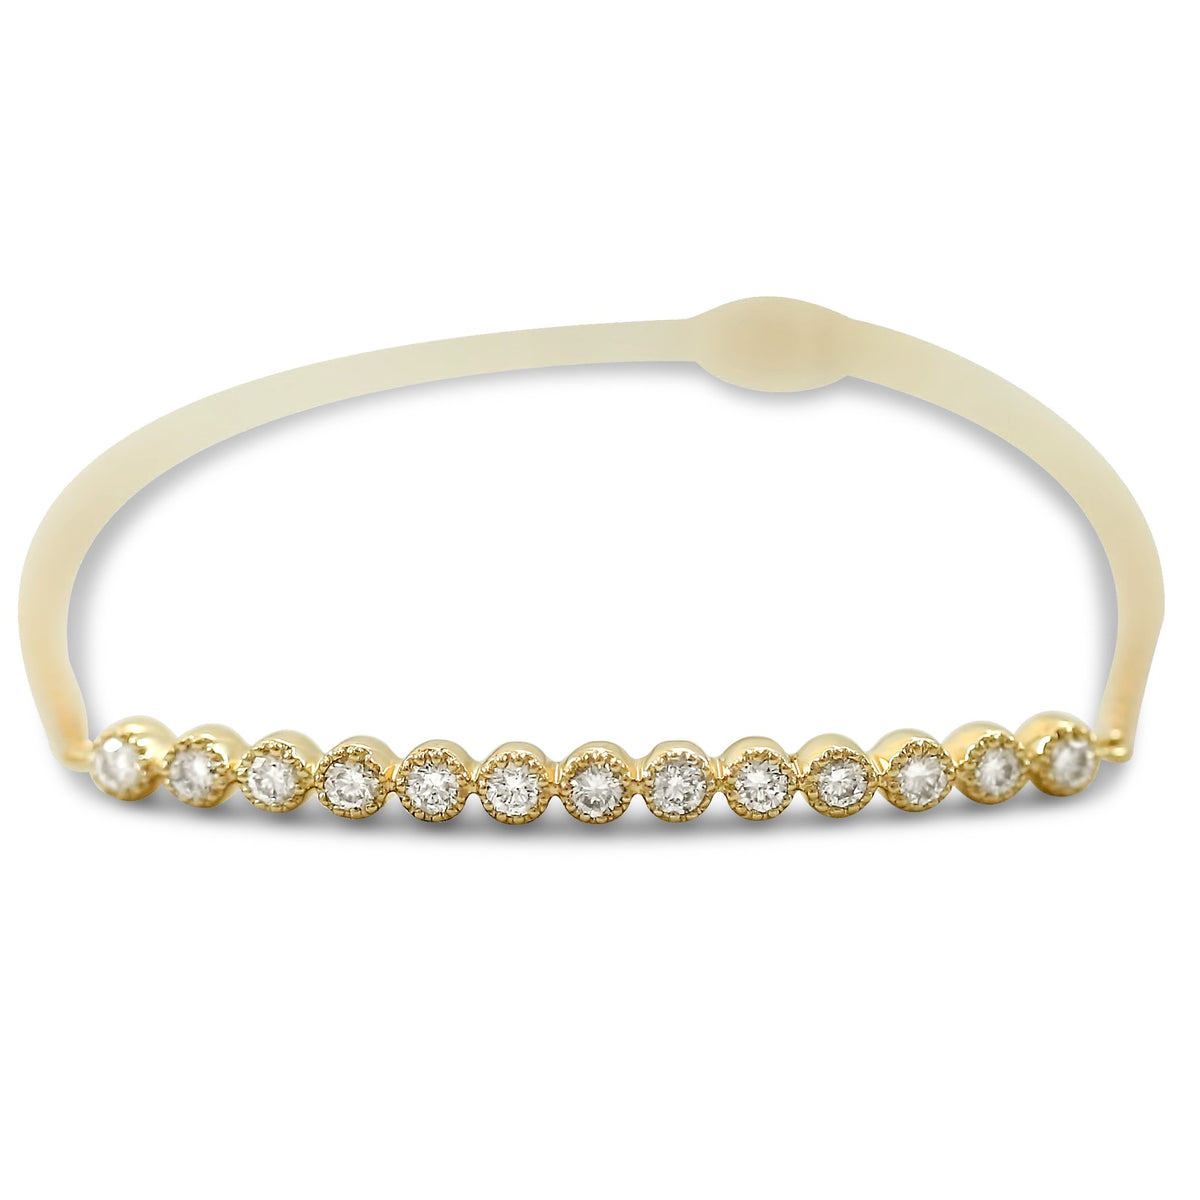 14k yellow gold diamond bracelet bezel set with milgrain details 7in long